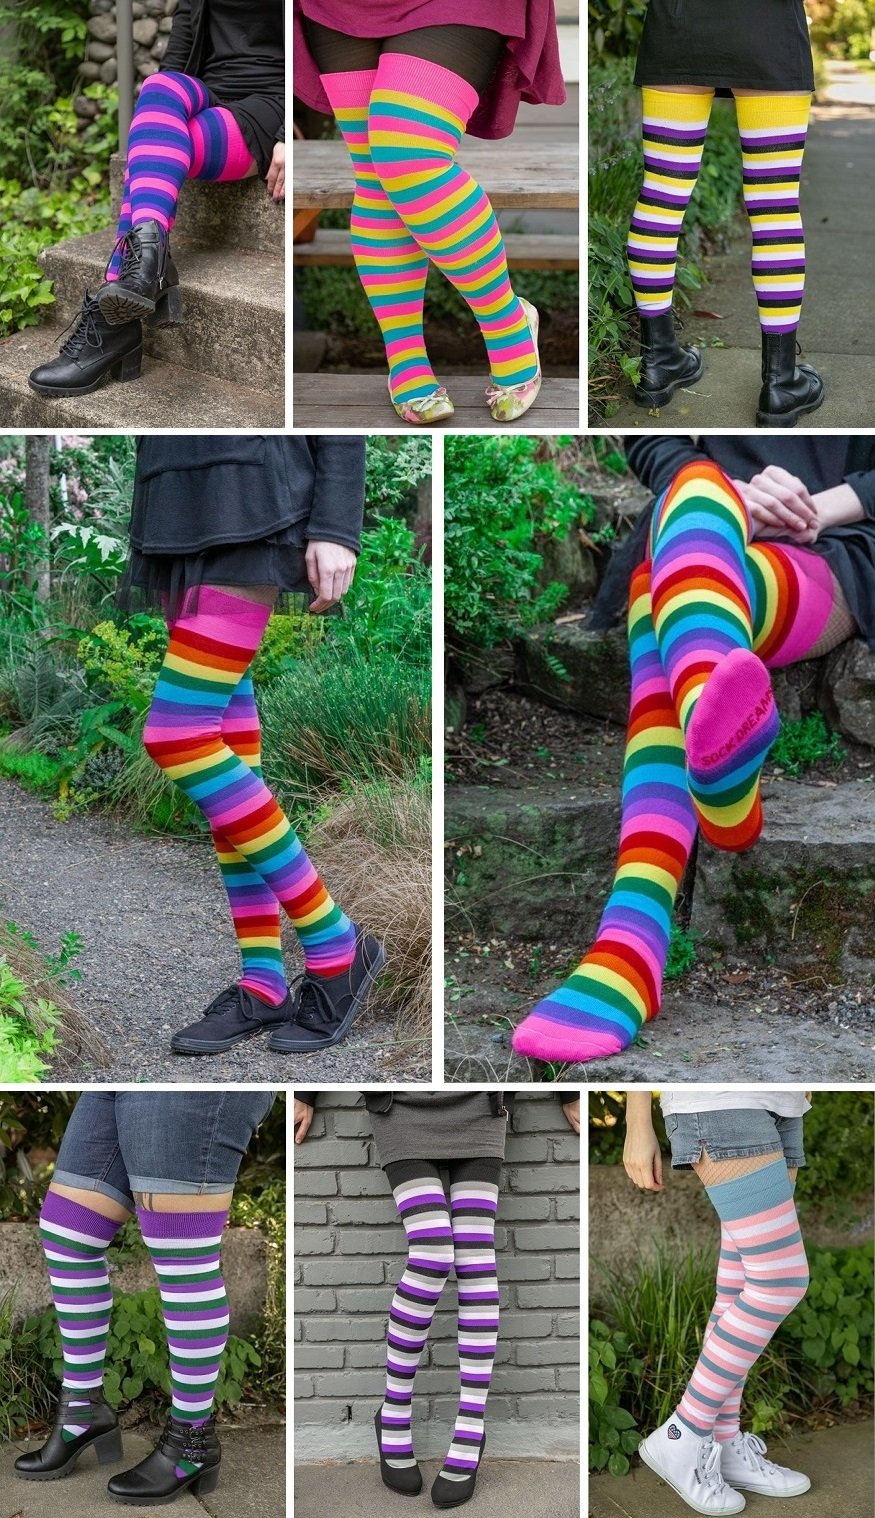 Sock Dreams - Neon Rainbow Tights - Unique Colorful Socks